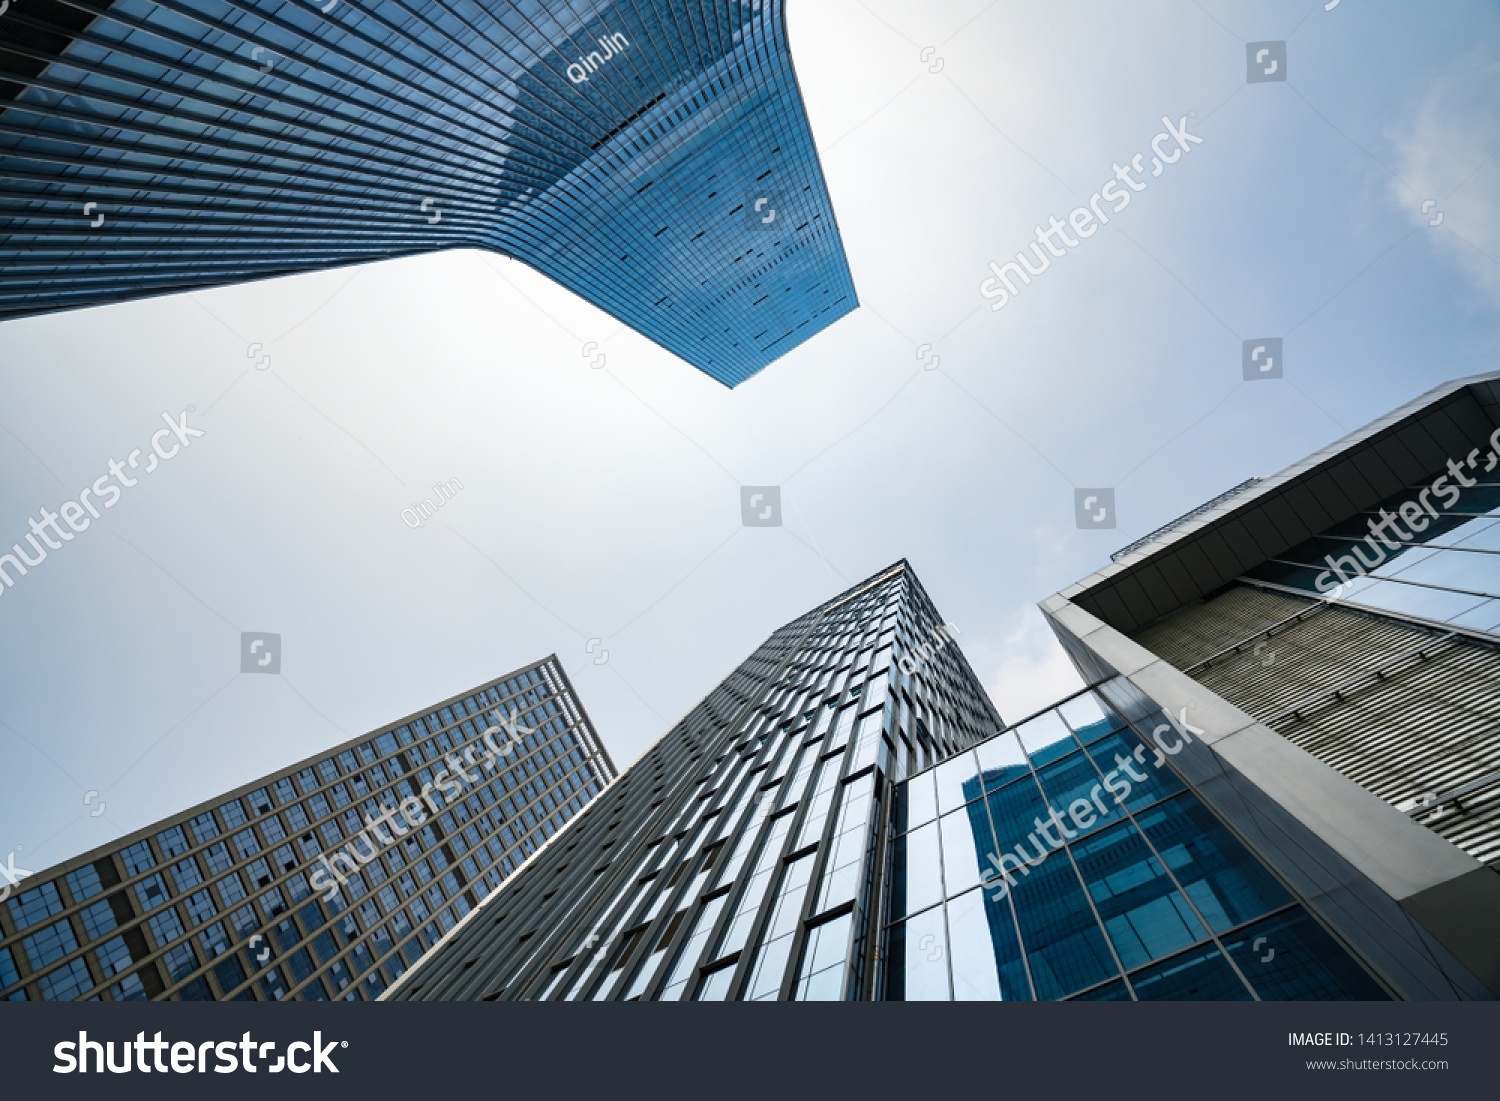 The skyscraper is in chongqing, China #1413127445